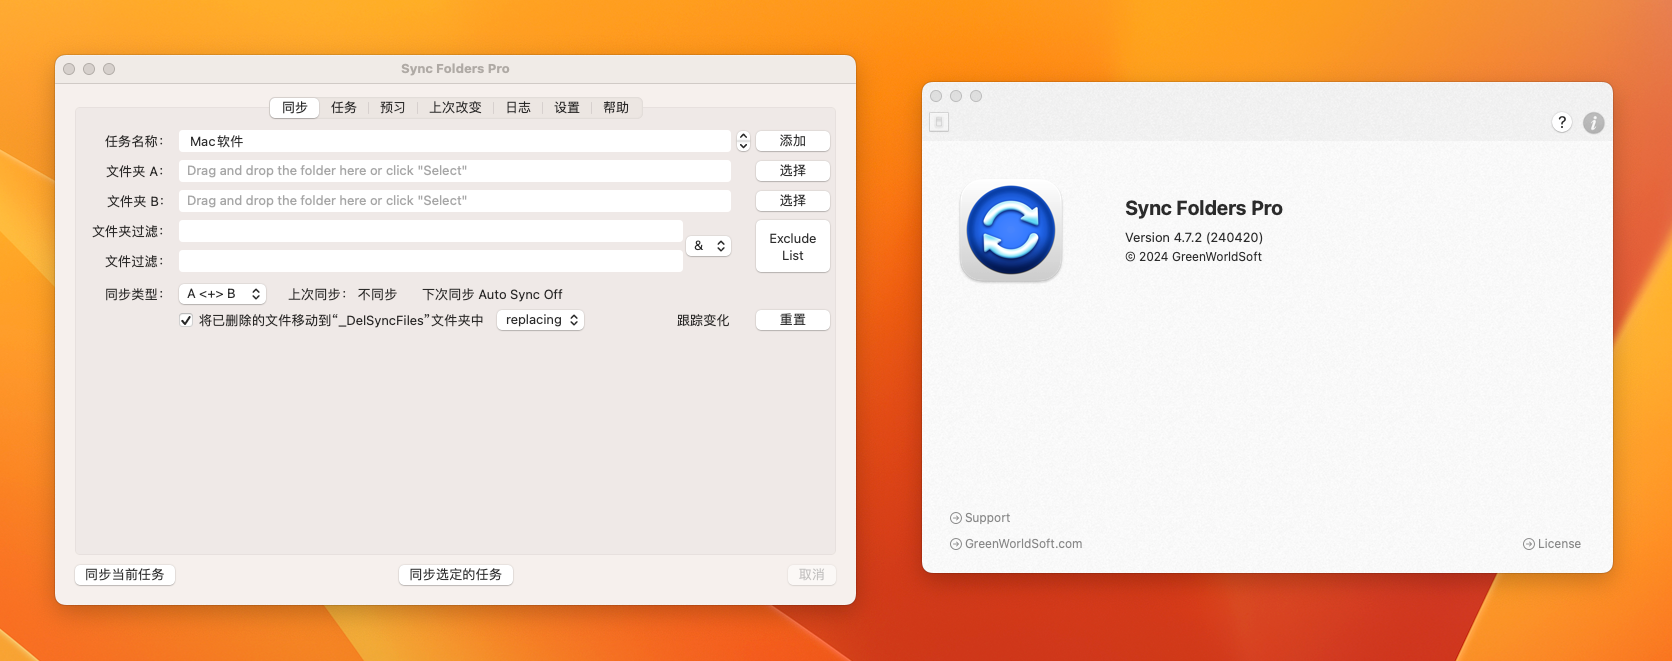 Sync Folders Pro for Mac v4.7.2 文件夹数据同步工具 免激活下载-1